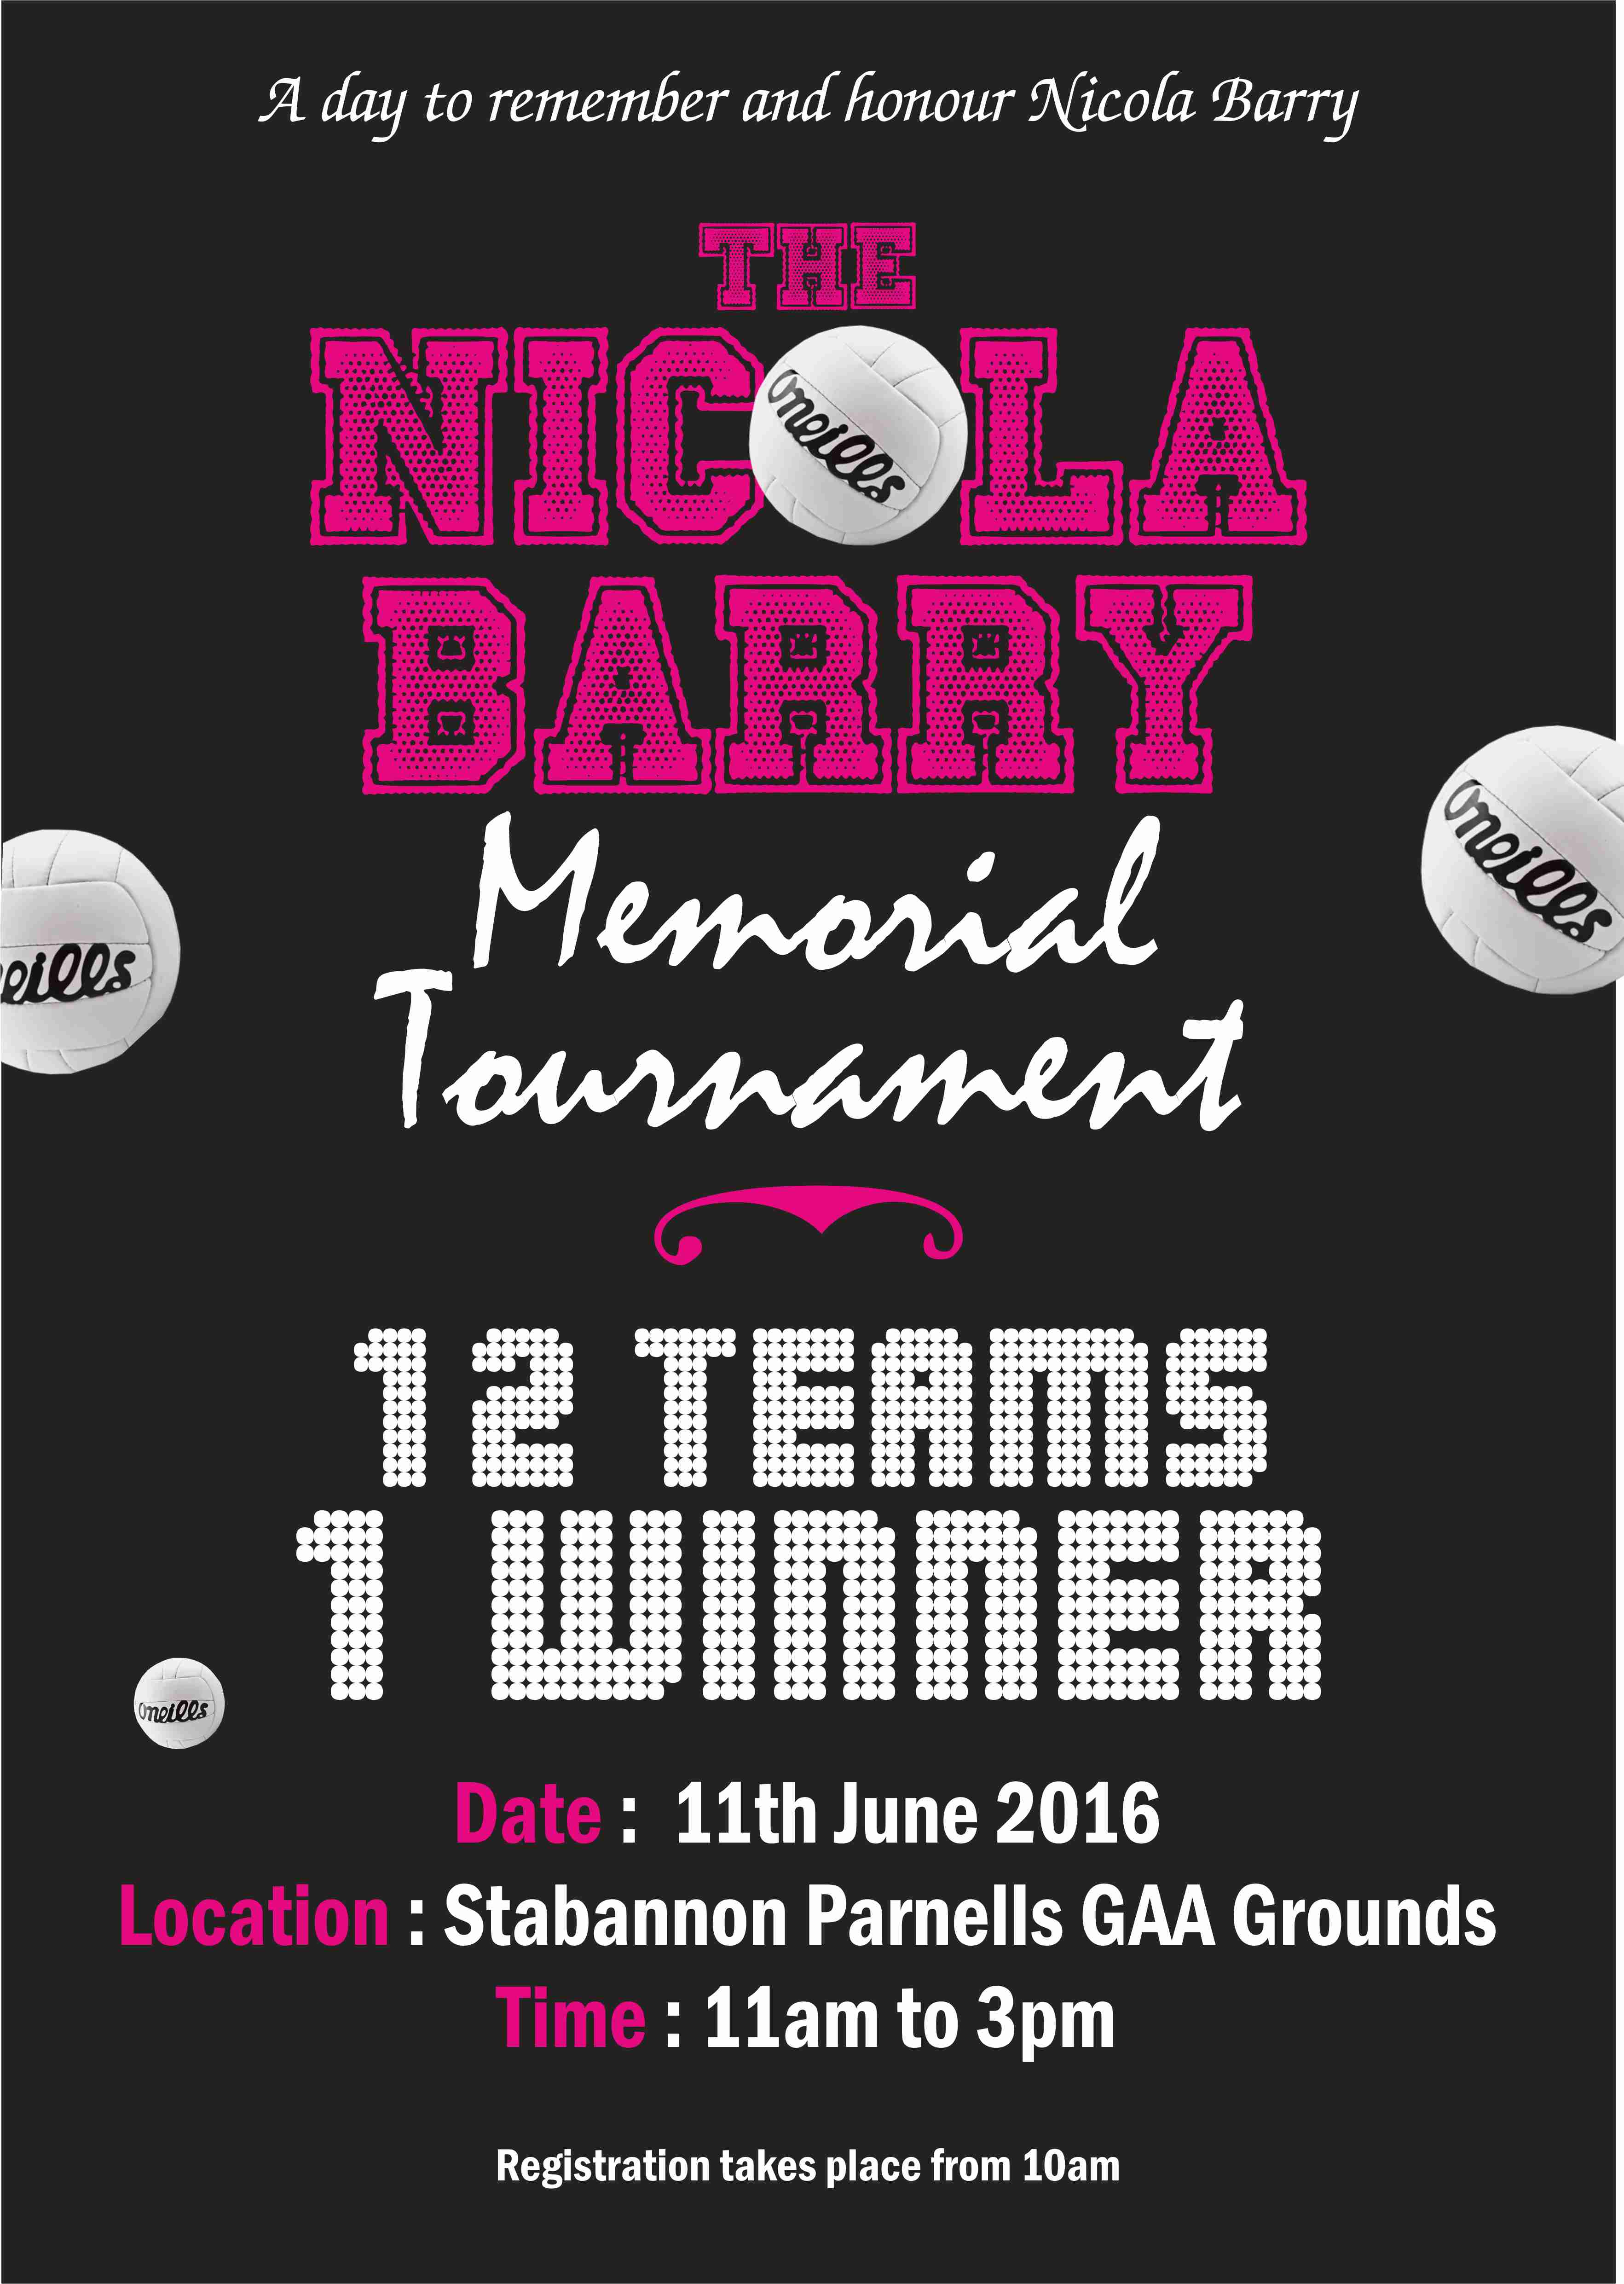 Nicola Barry Memorial Tournament Poster